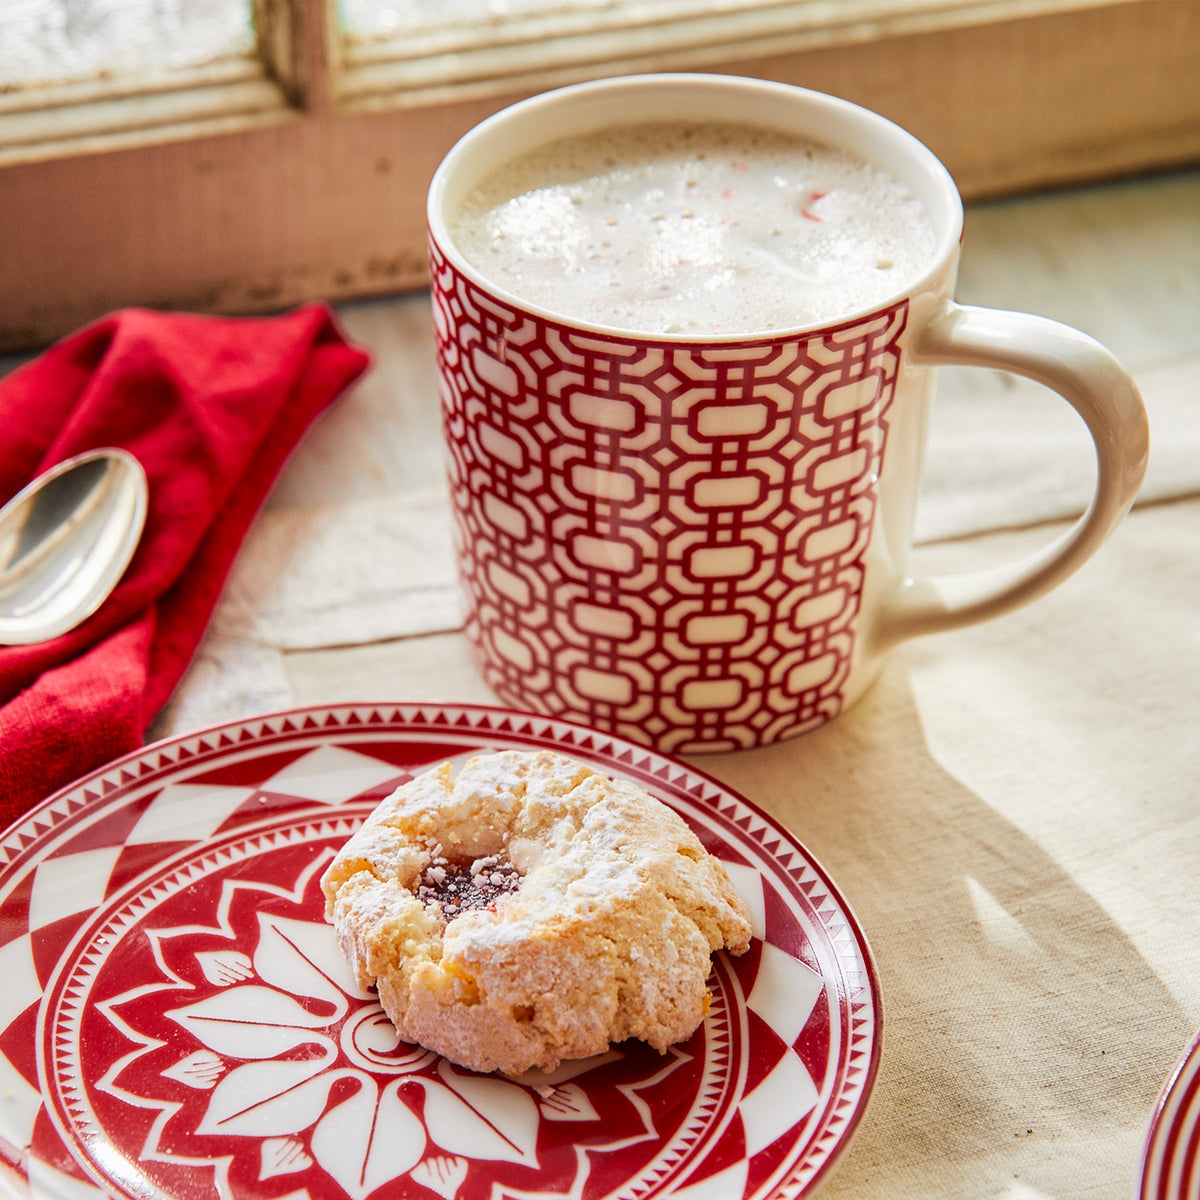 A Newport Garden Gate Crimson Mug of coffee and a donut on a Caskata Artisanal Home dinnerware plate.